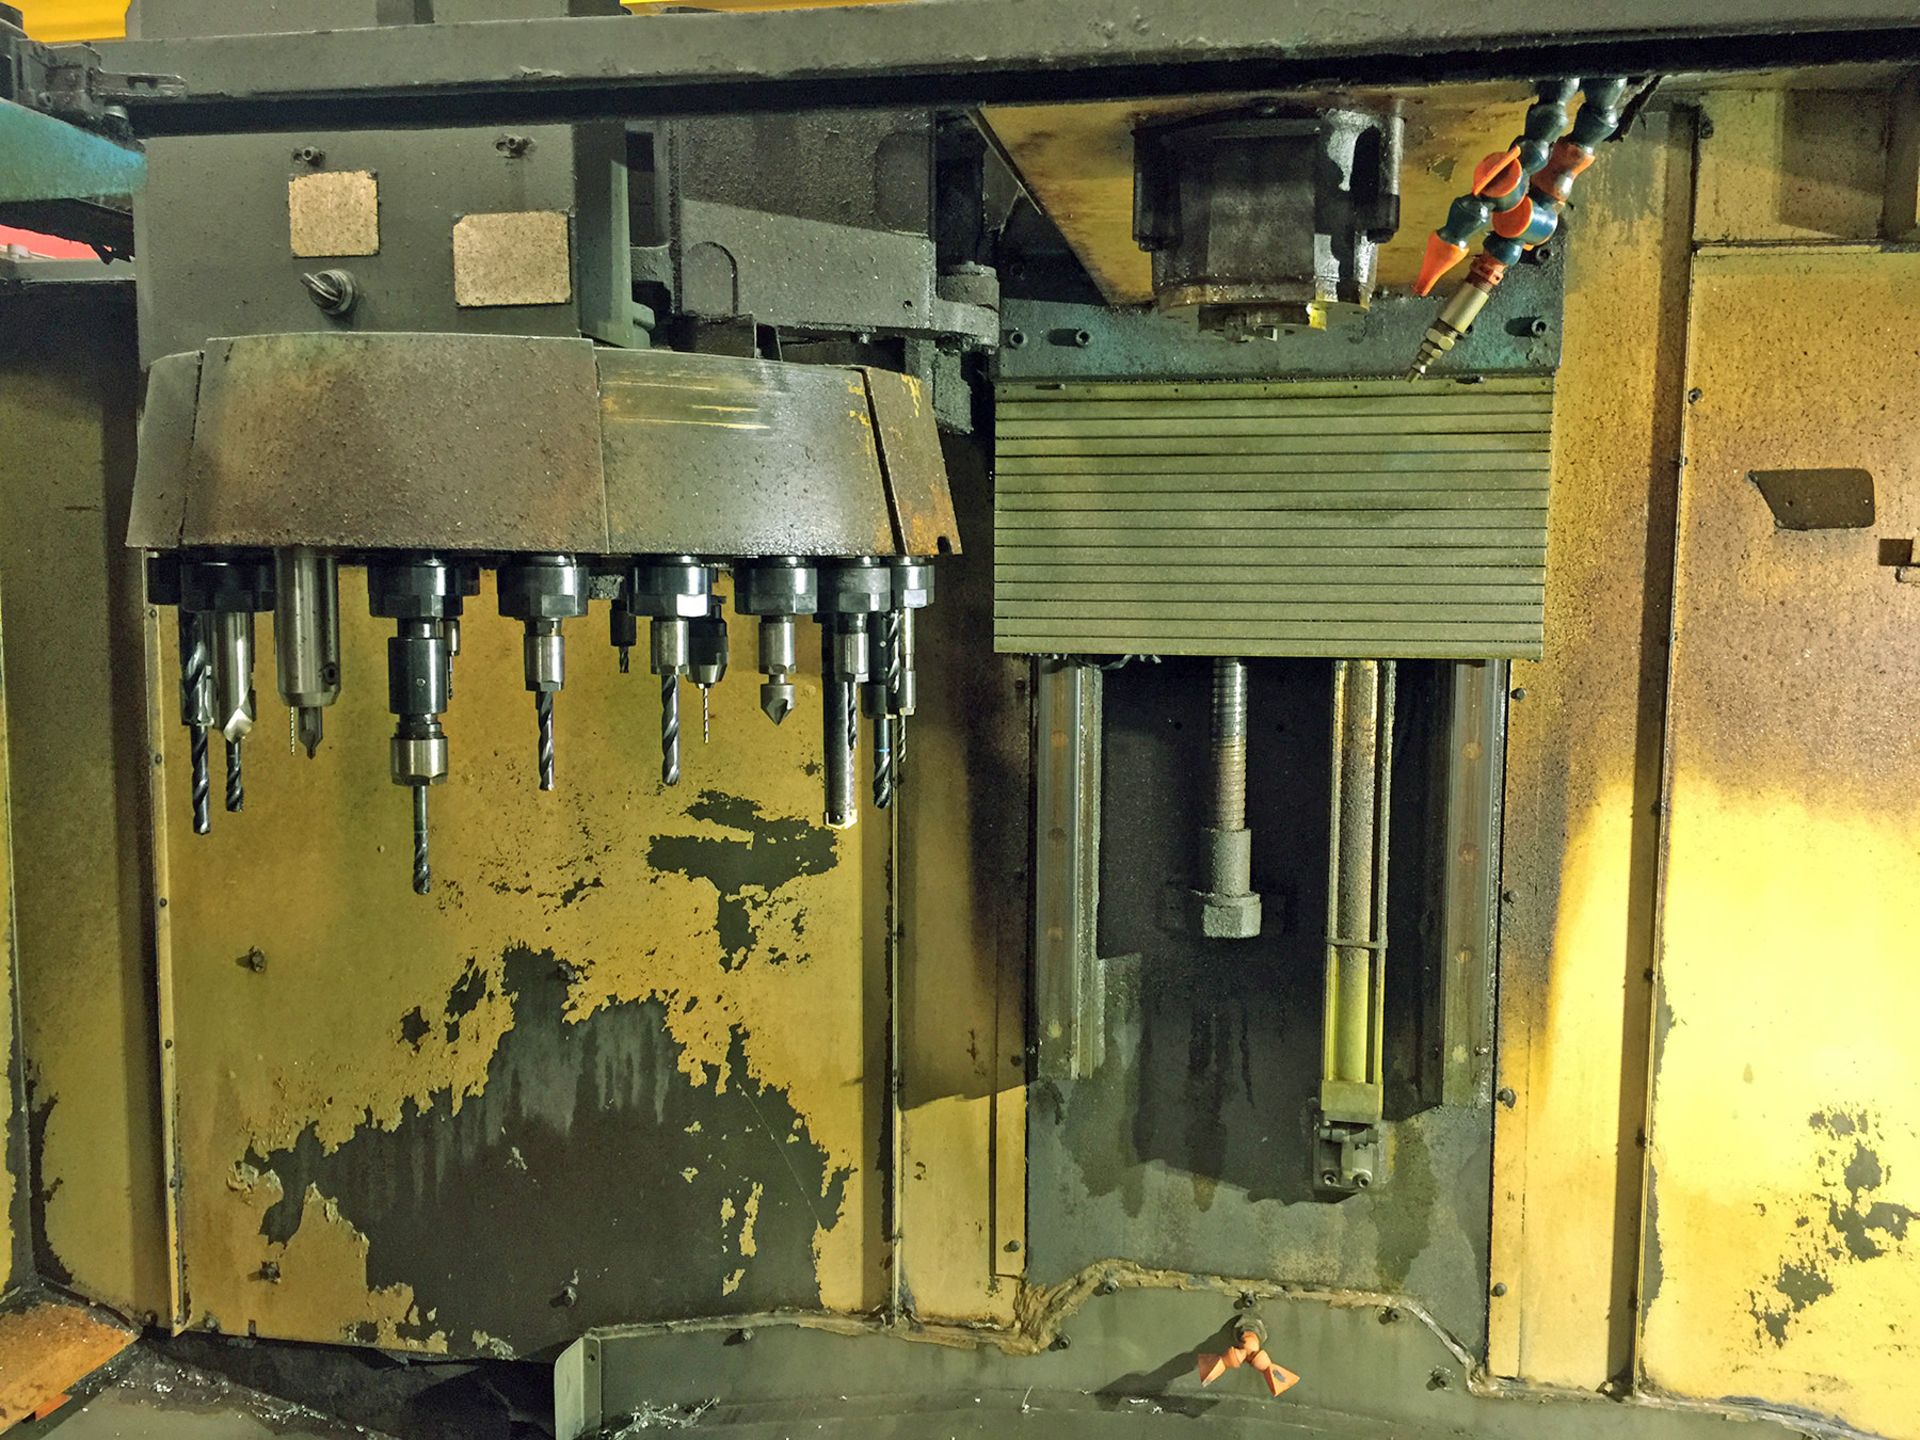 Cincinnati Milacron Saber 1250 CNC Vertical Machining Center - Image 4 of 10